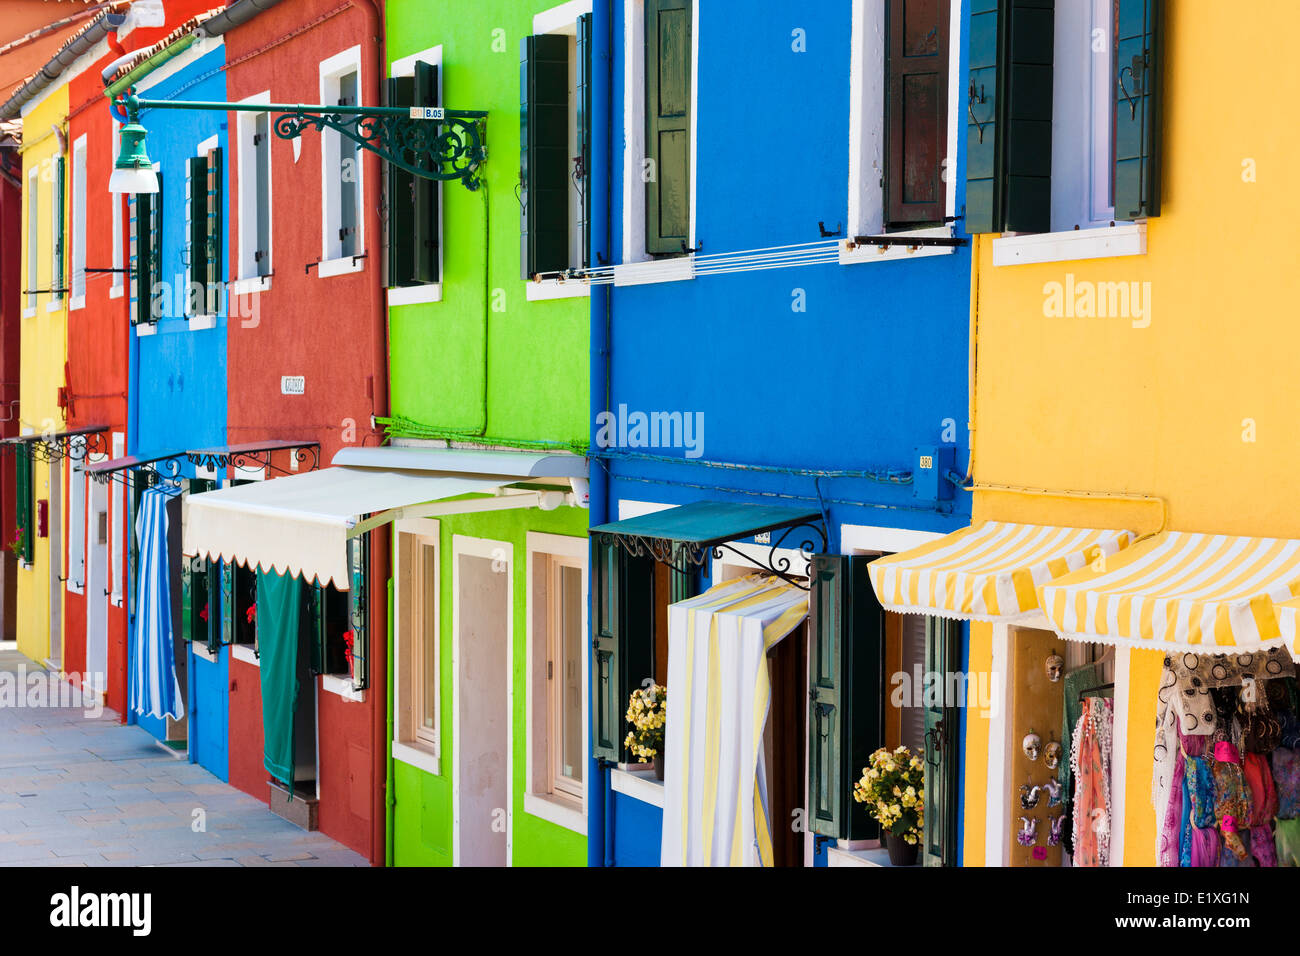 Venice landmark, Burano island, colorful houses Stock Photo